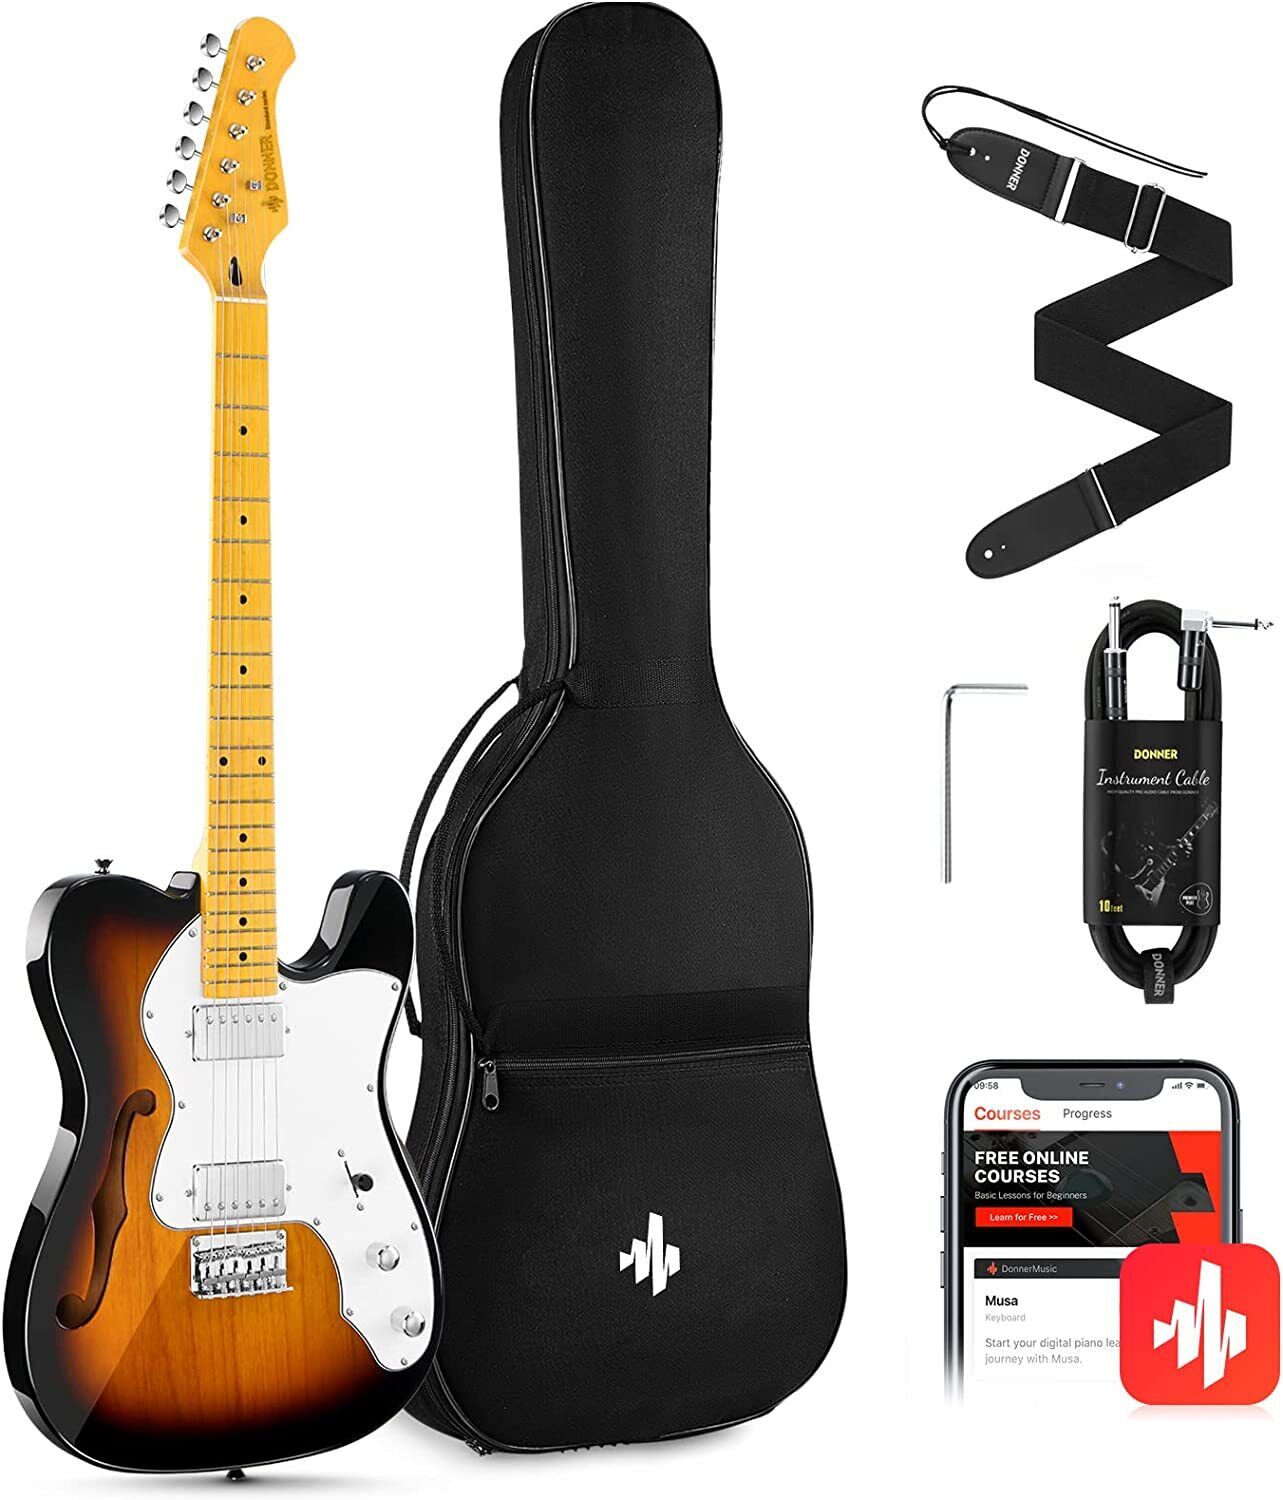 Donner DJC-1000S Electric Jazz Tele Guitar Thinline Humbucker H-H Pickups